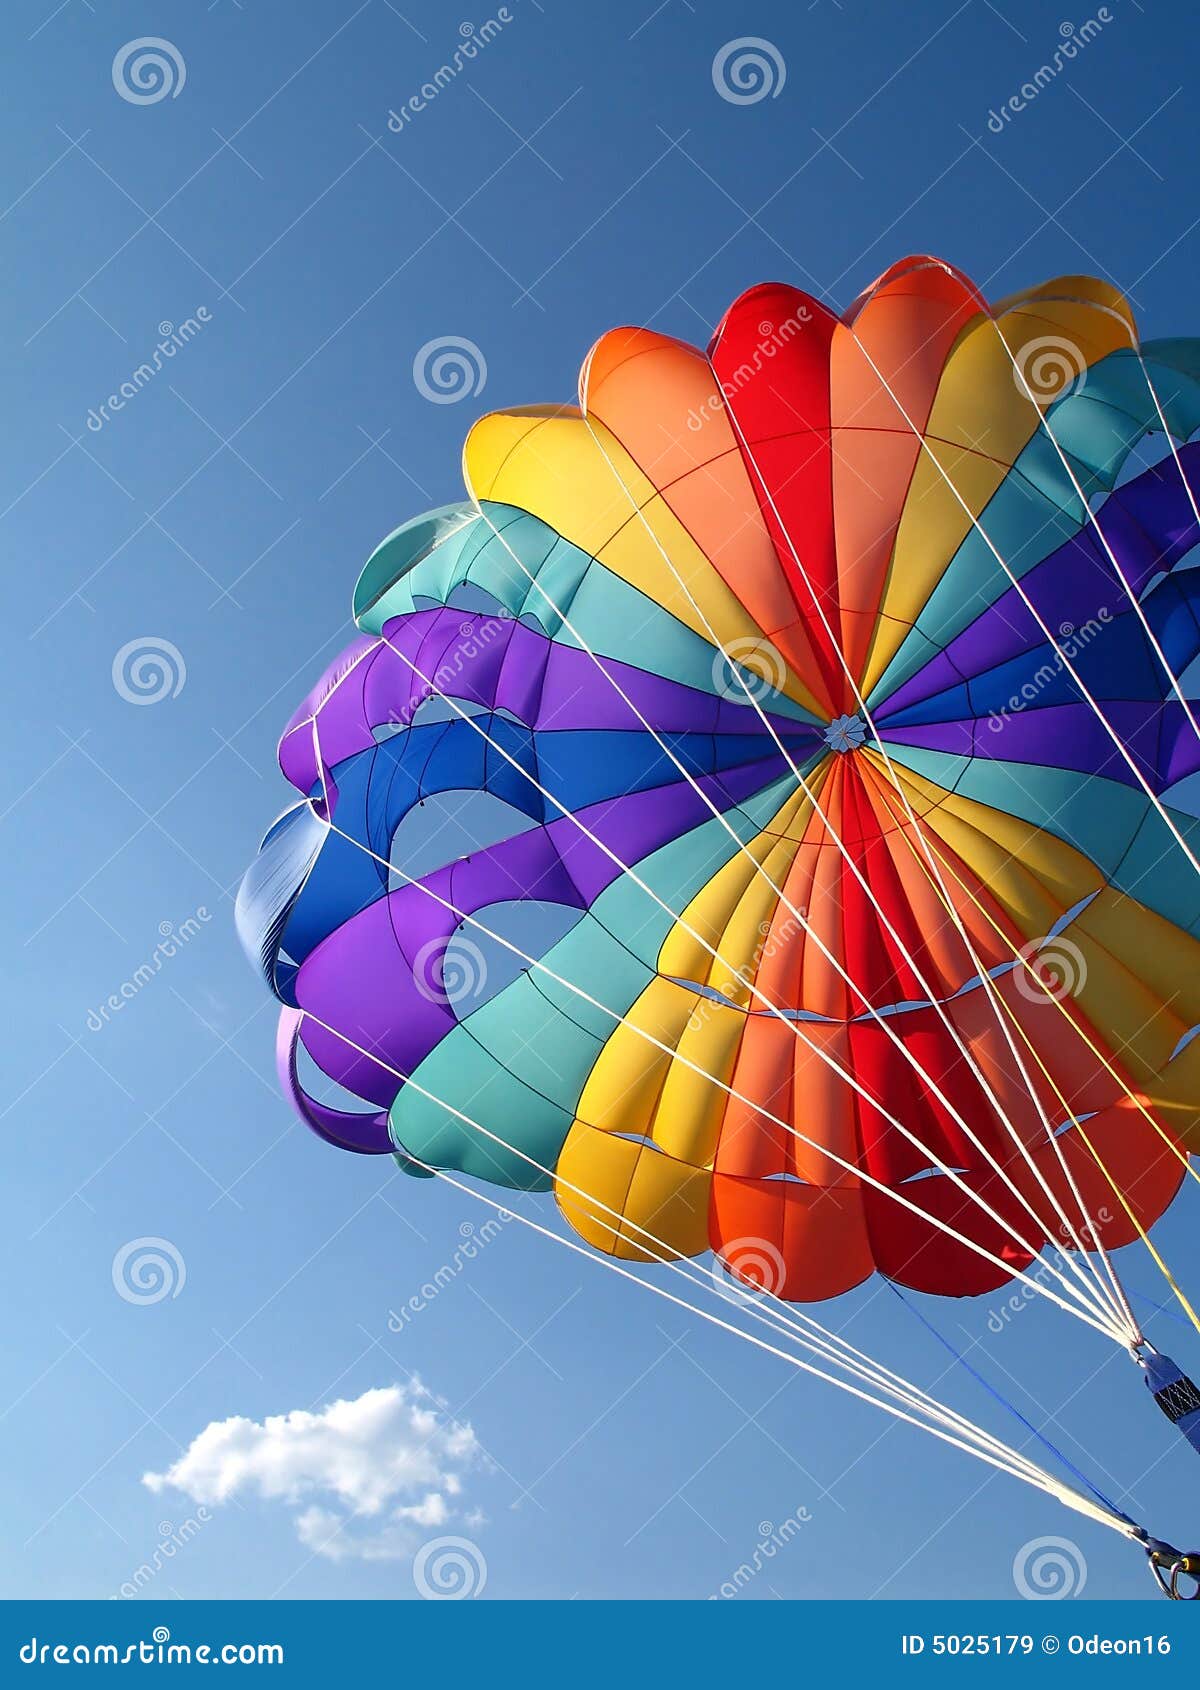 parachute detail